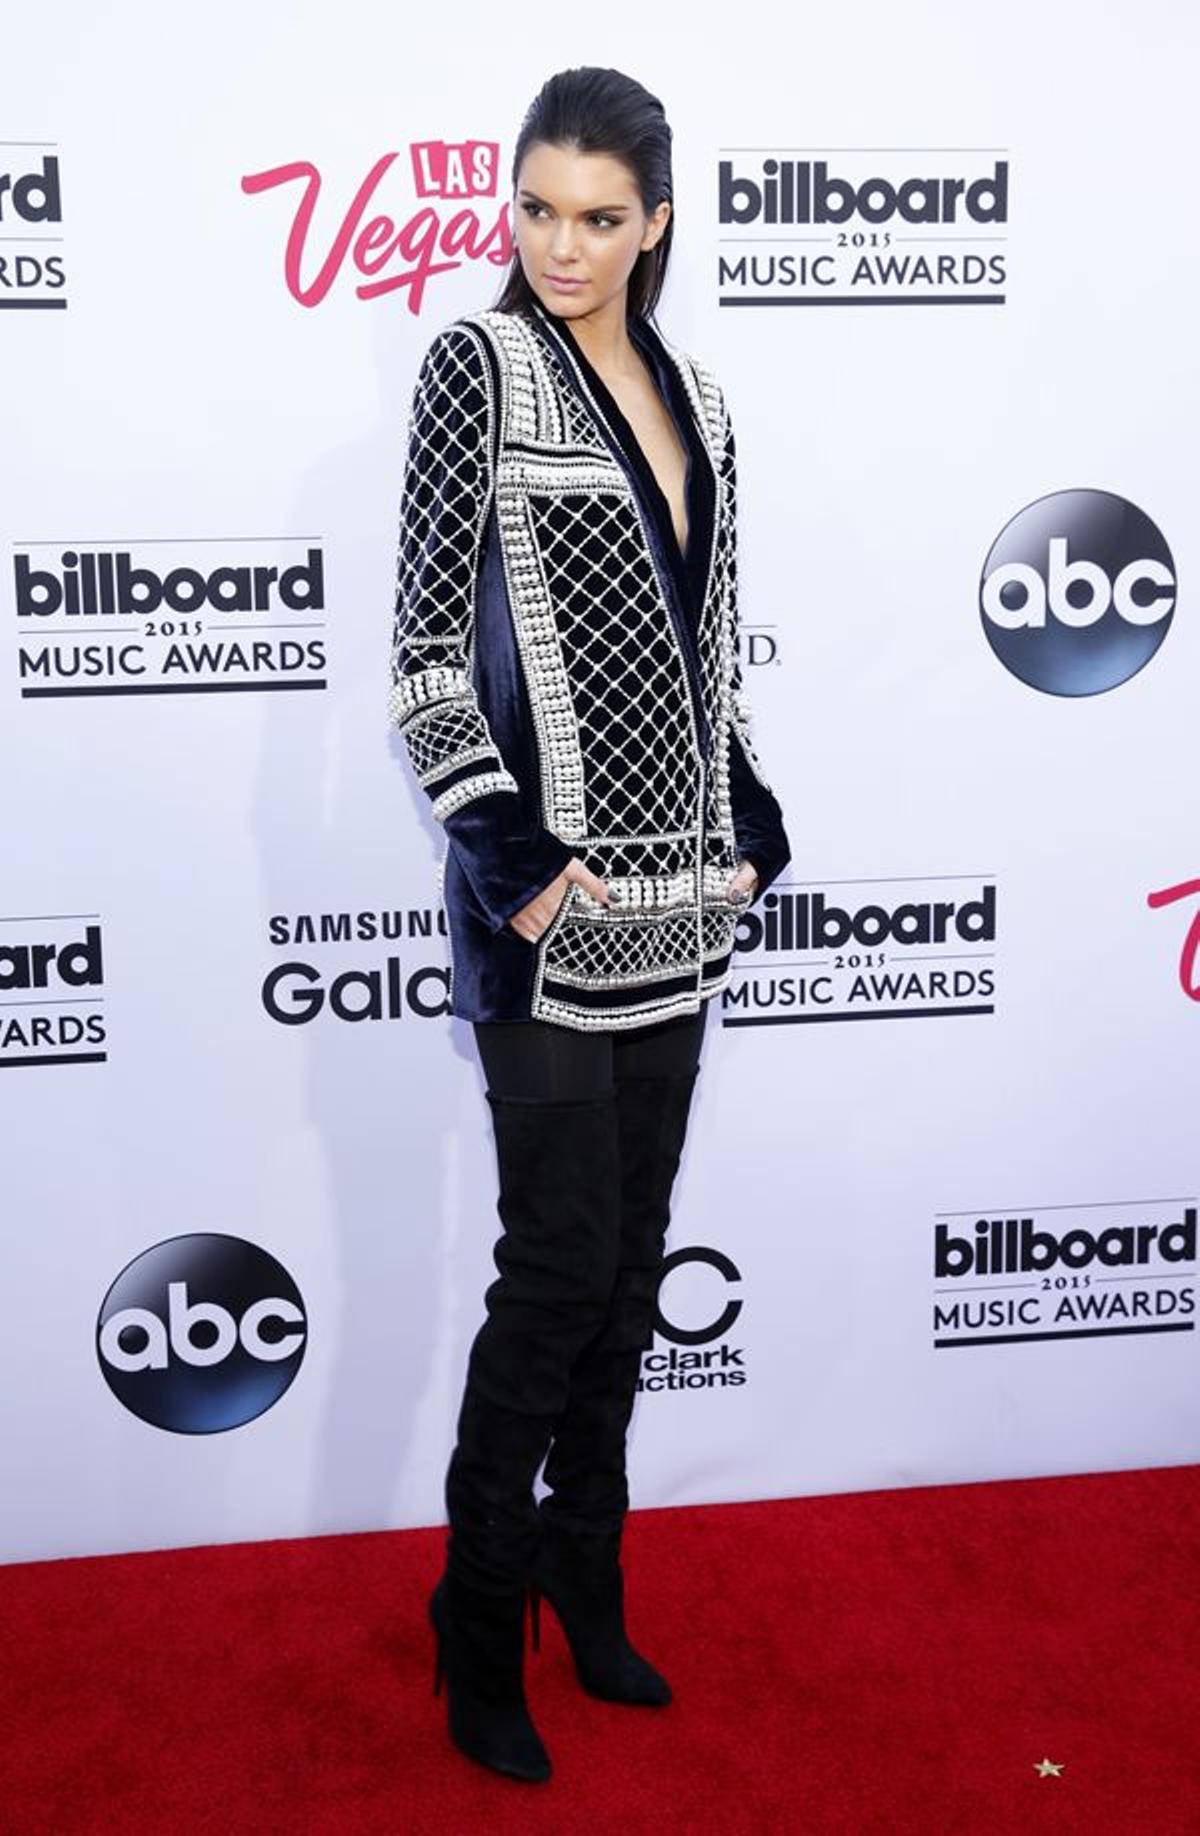 Billboard Music Awards 2015: kendall jenner